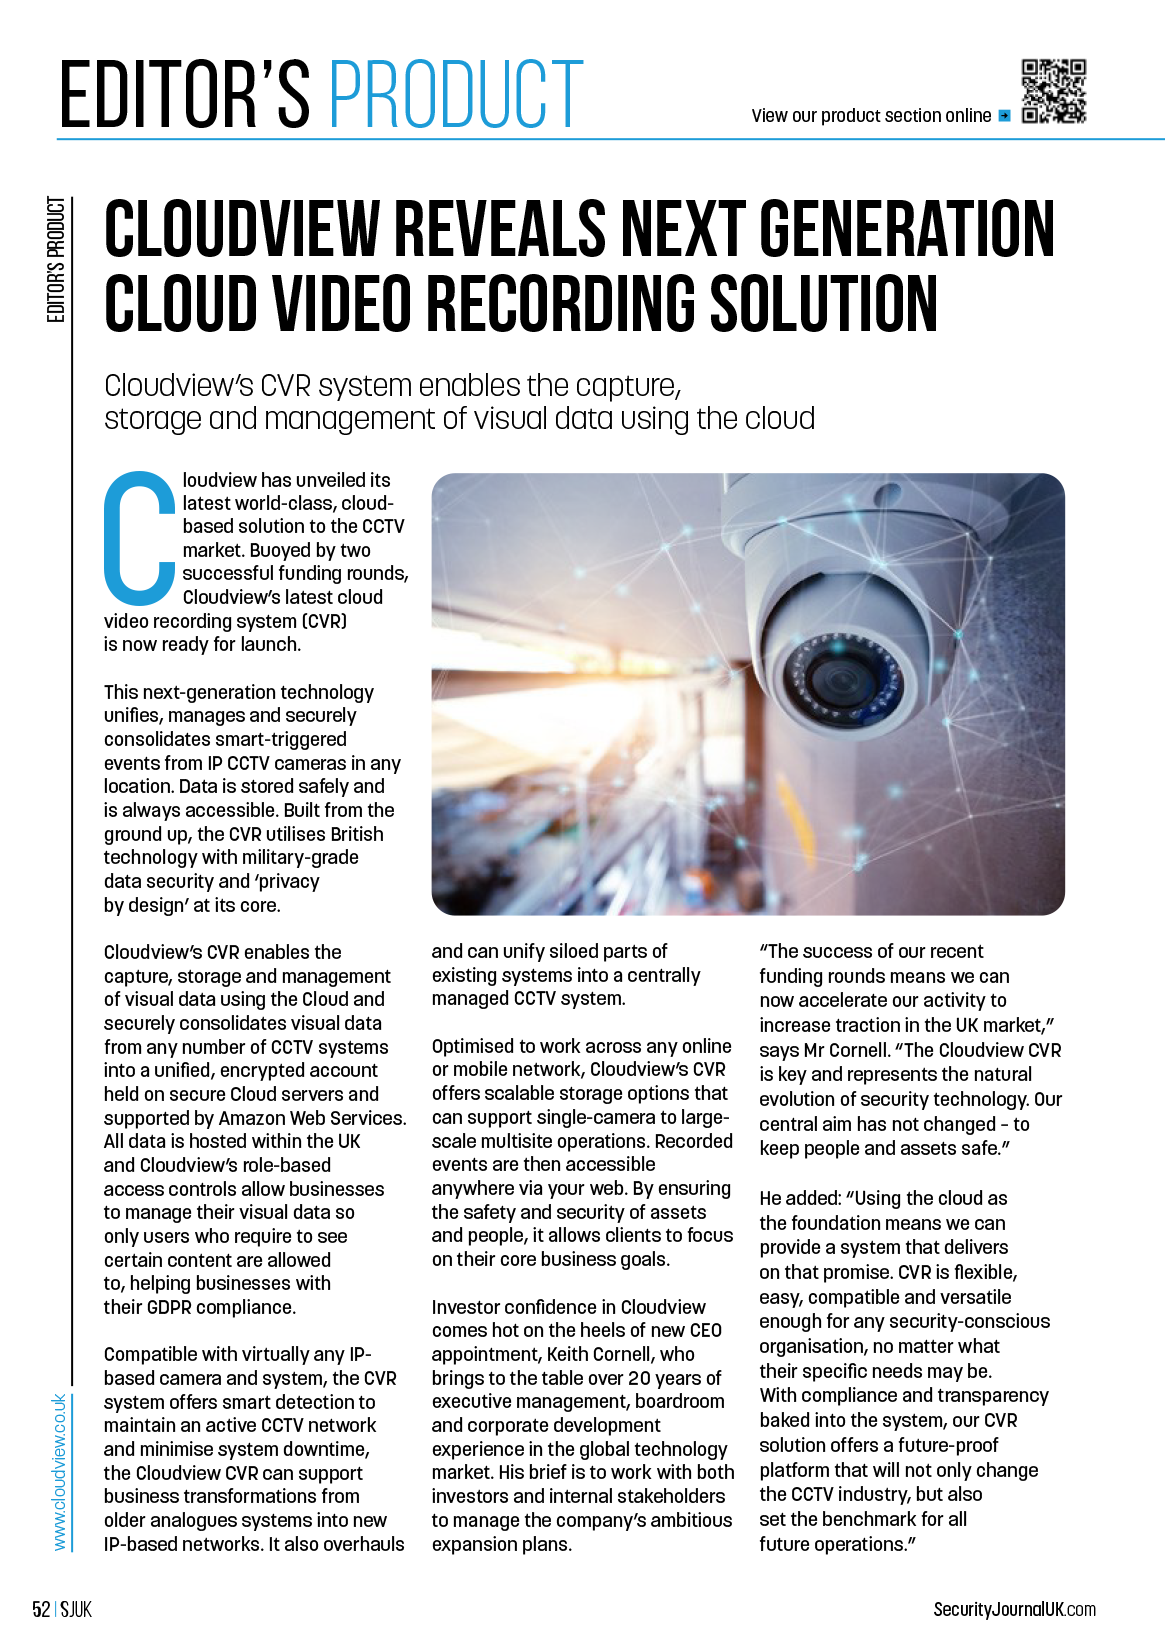 CCTV networks and biometric surveillance